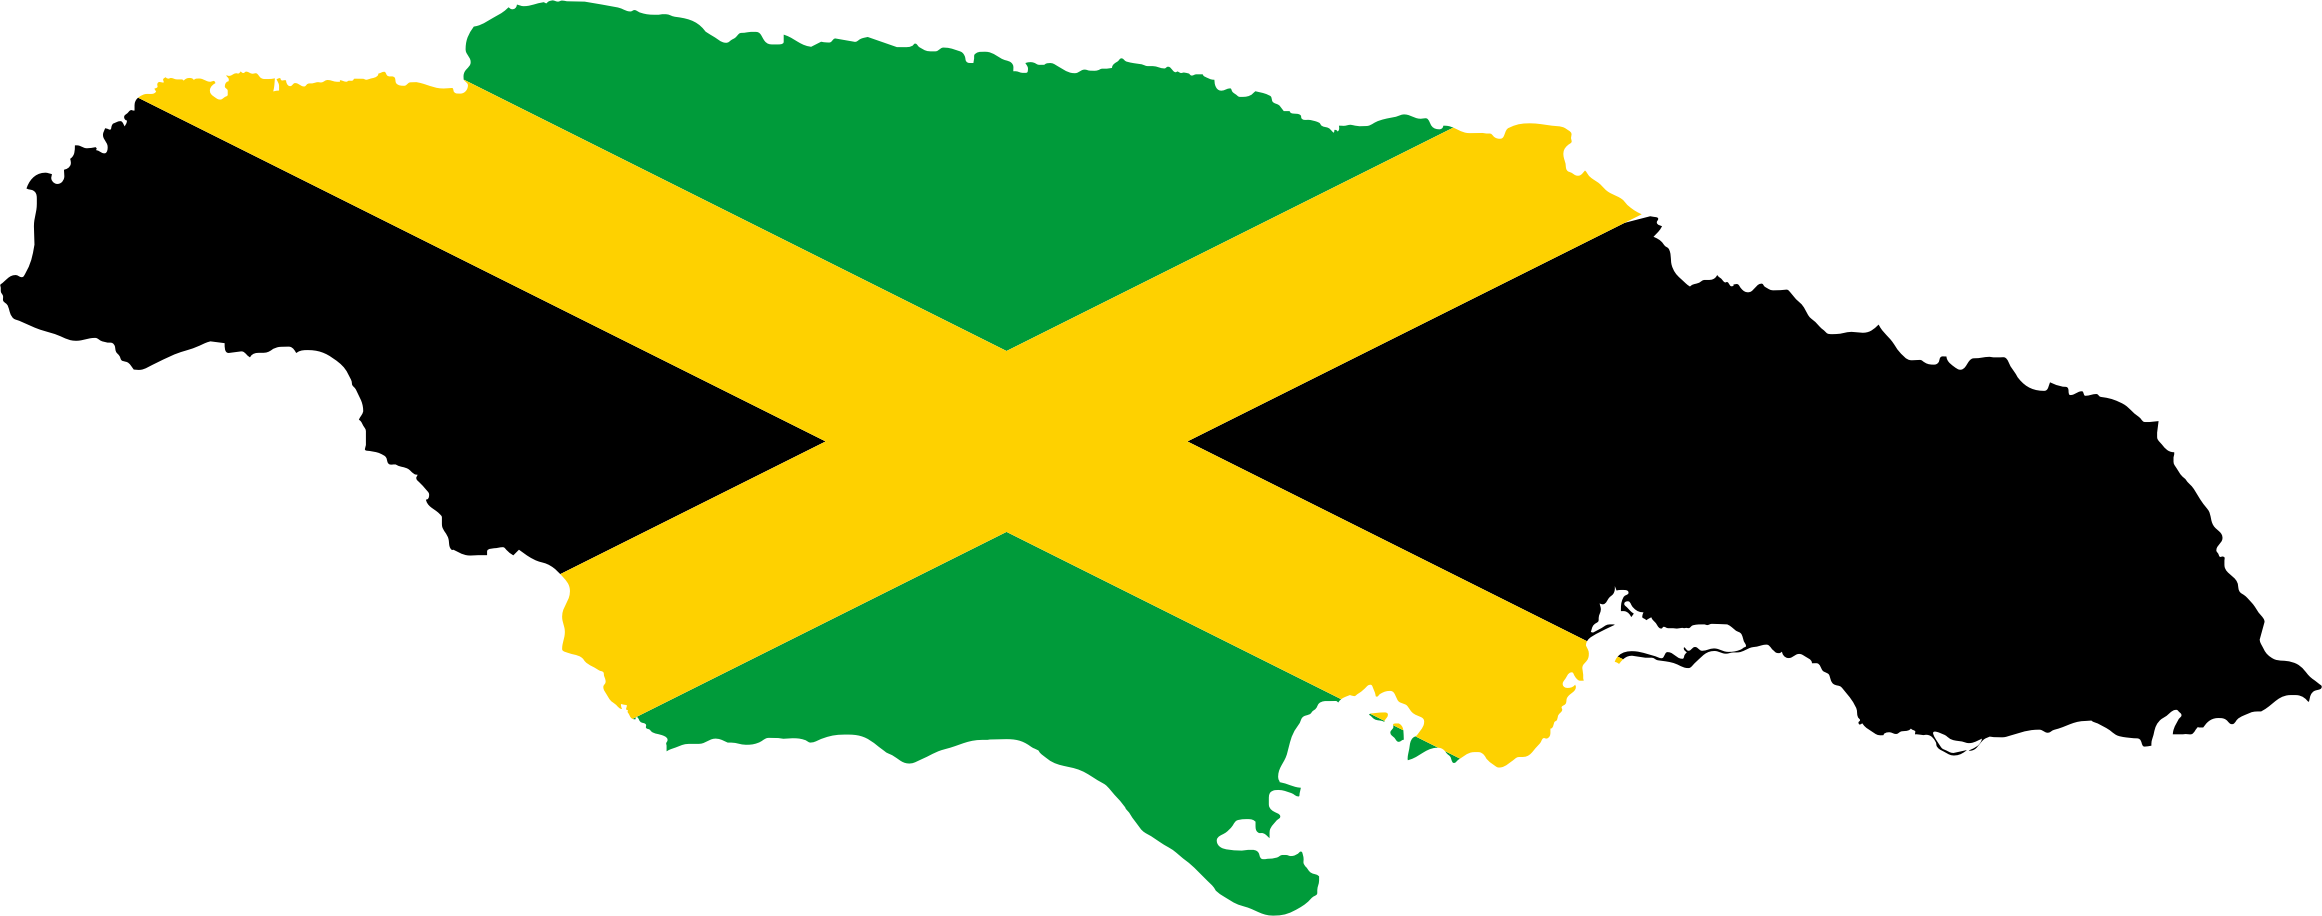 Free Jamaica Flag Png Transparent Images Download Free Jamaica Flag Png ...